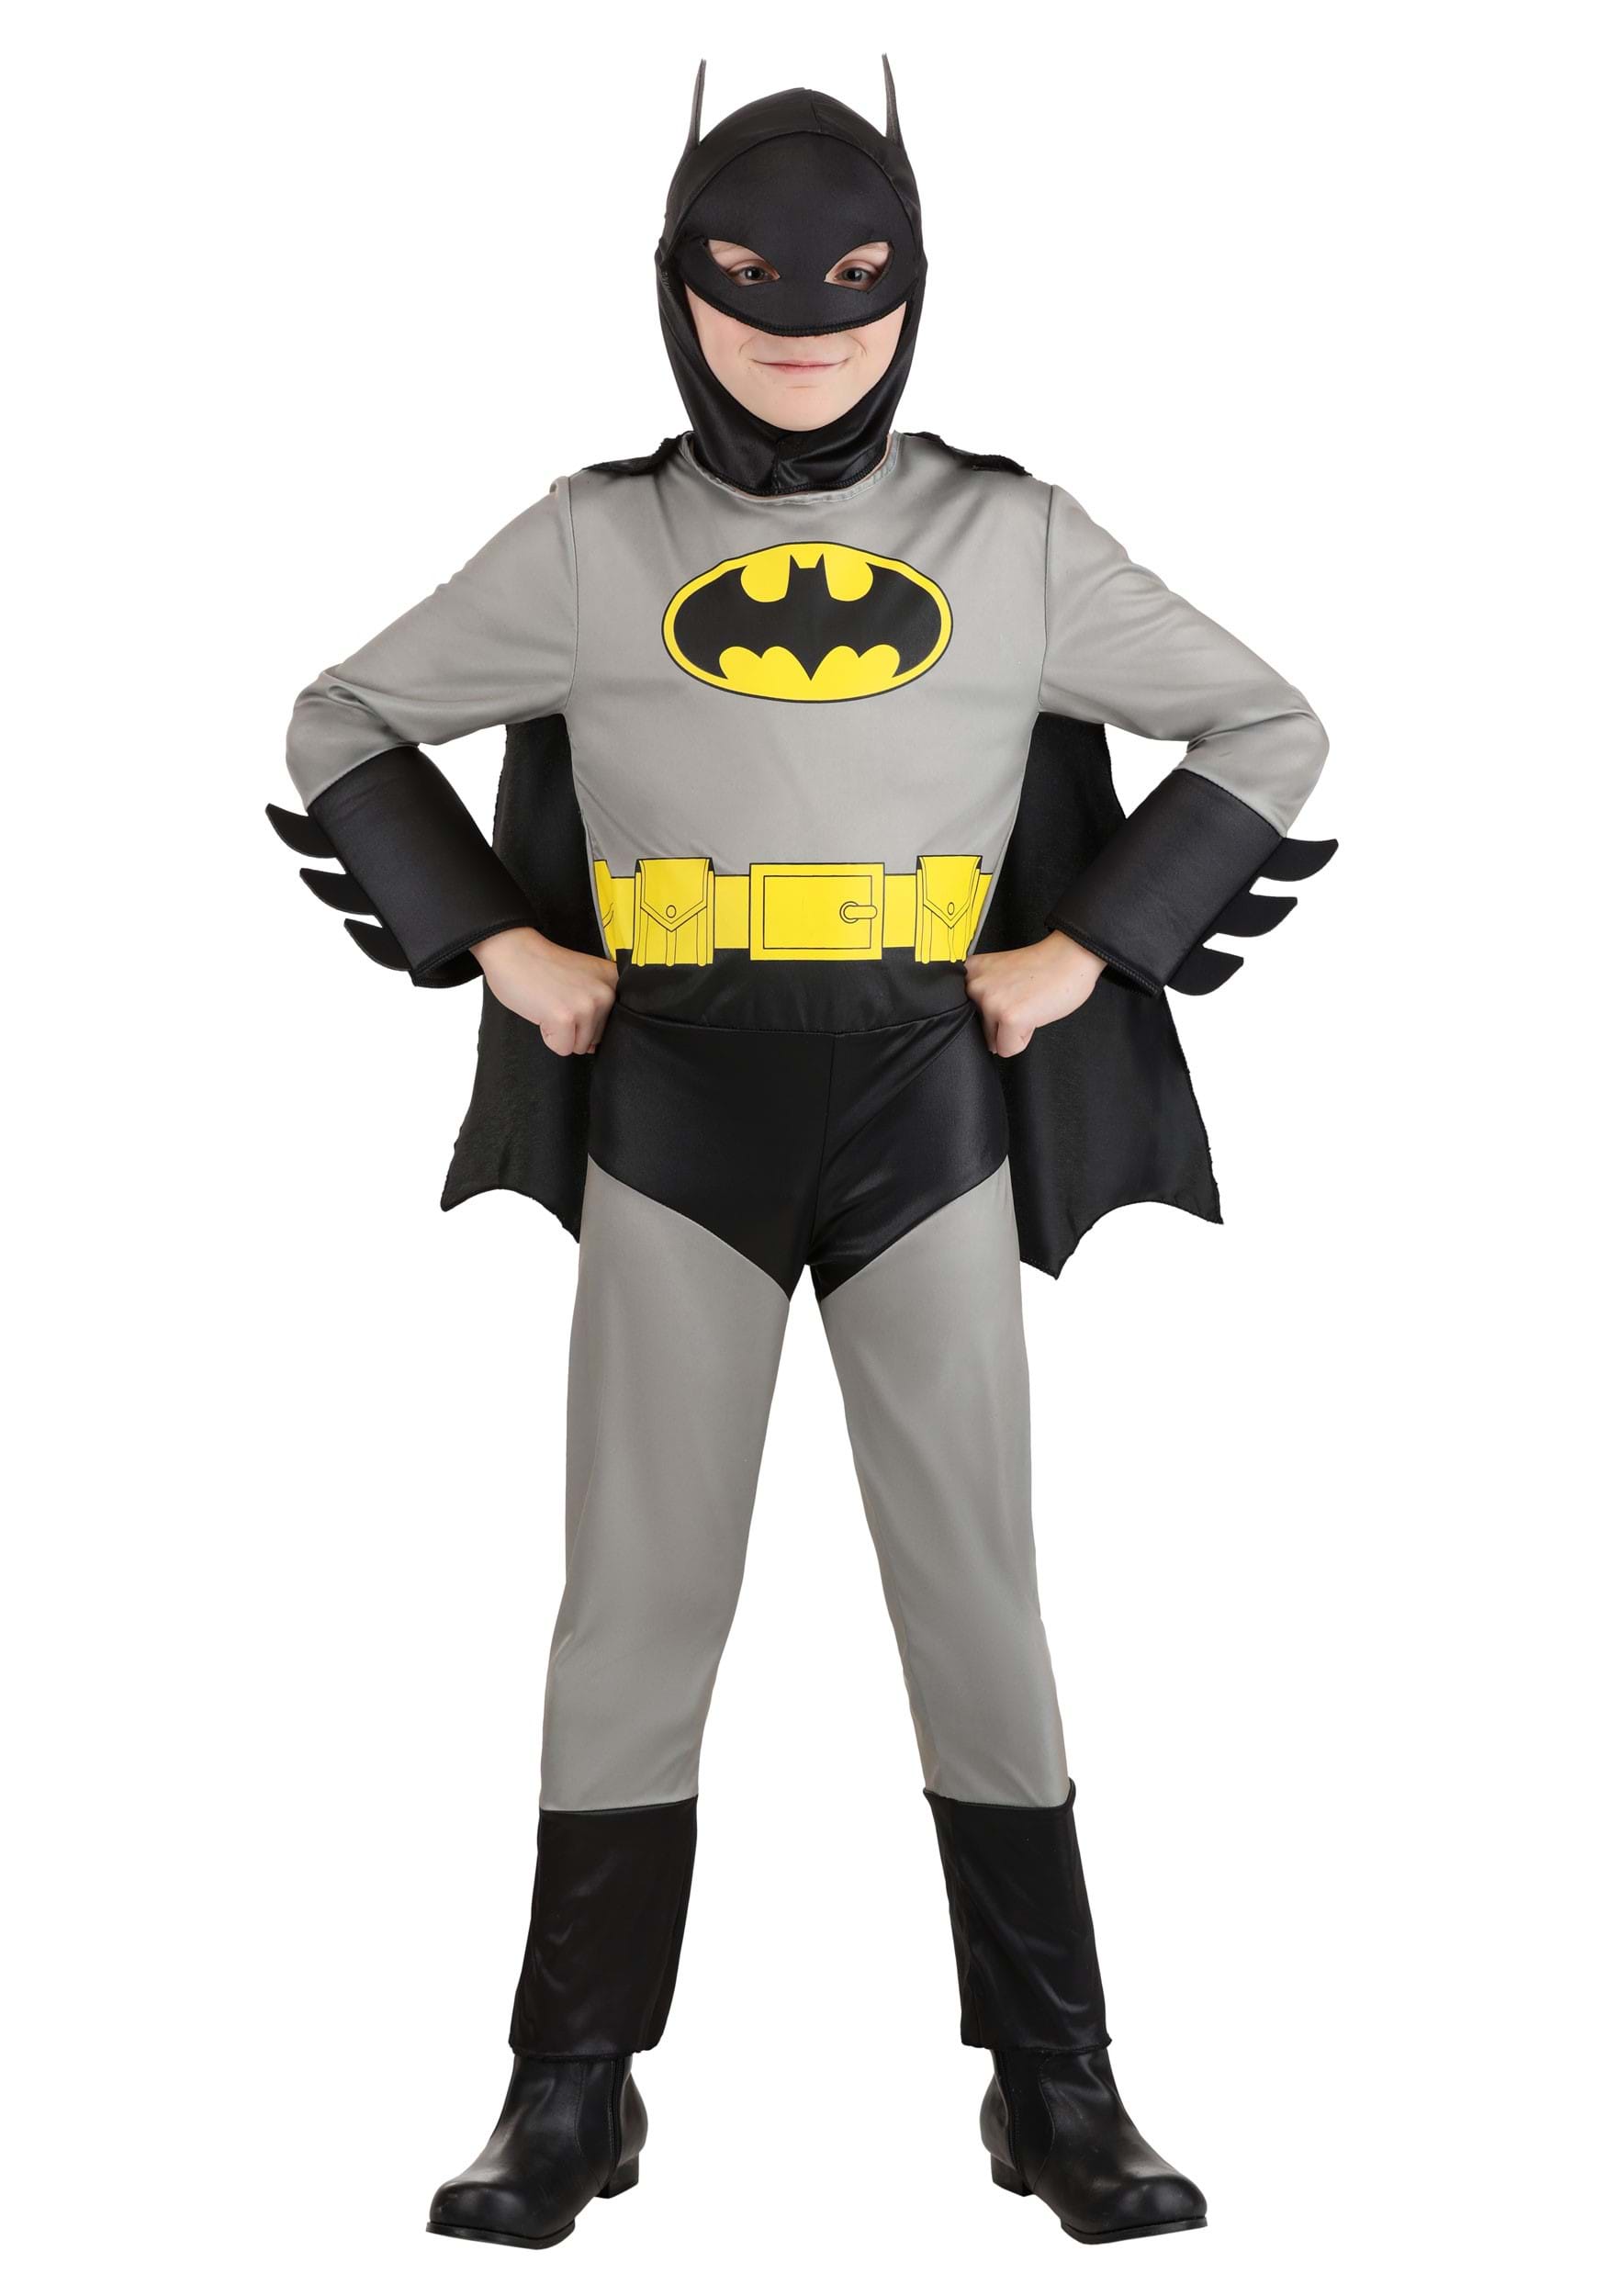 https://images.halloween.com/products/74237/1-1/classic-batman-kids-costume-0.jpg